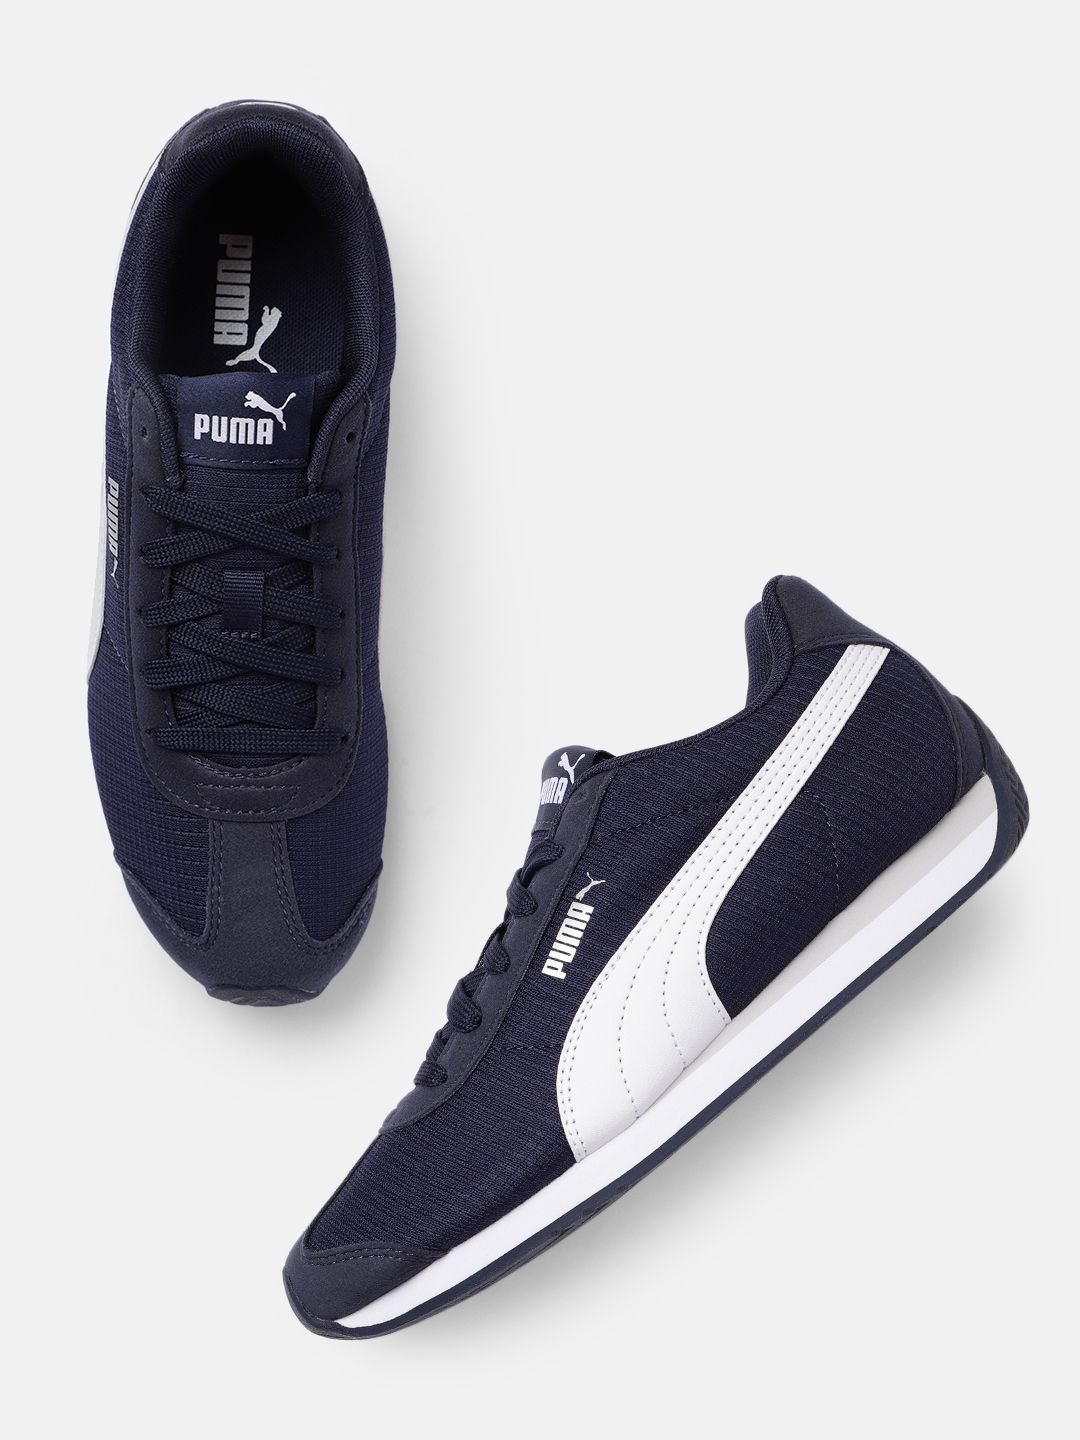 Puma Unisex Blue Solid Sneakers Price in India